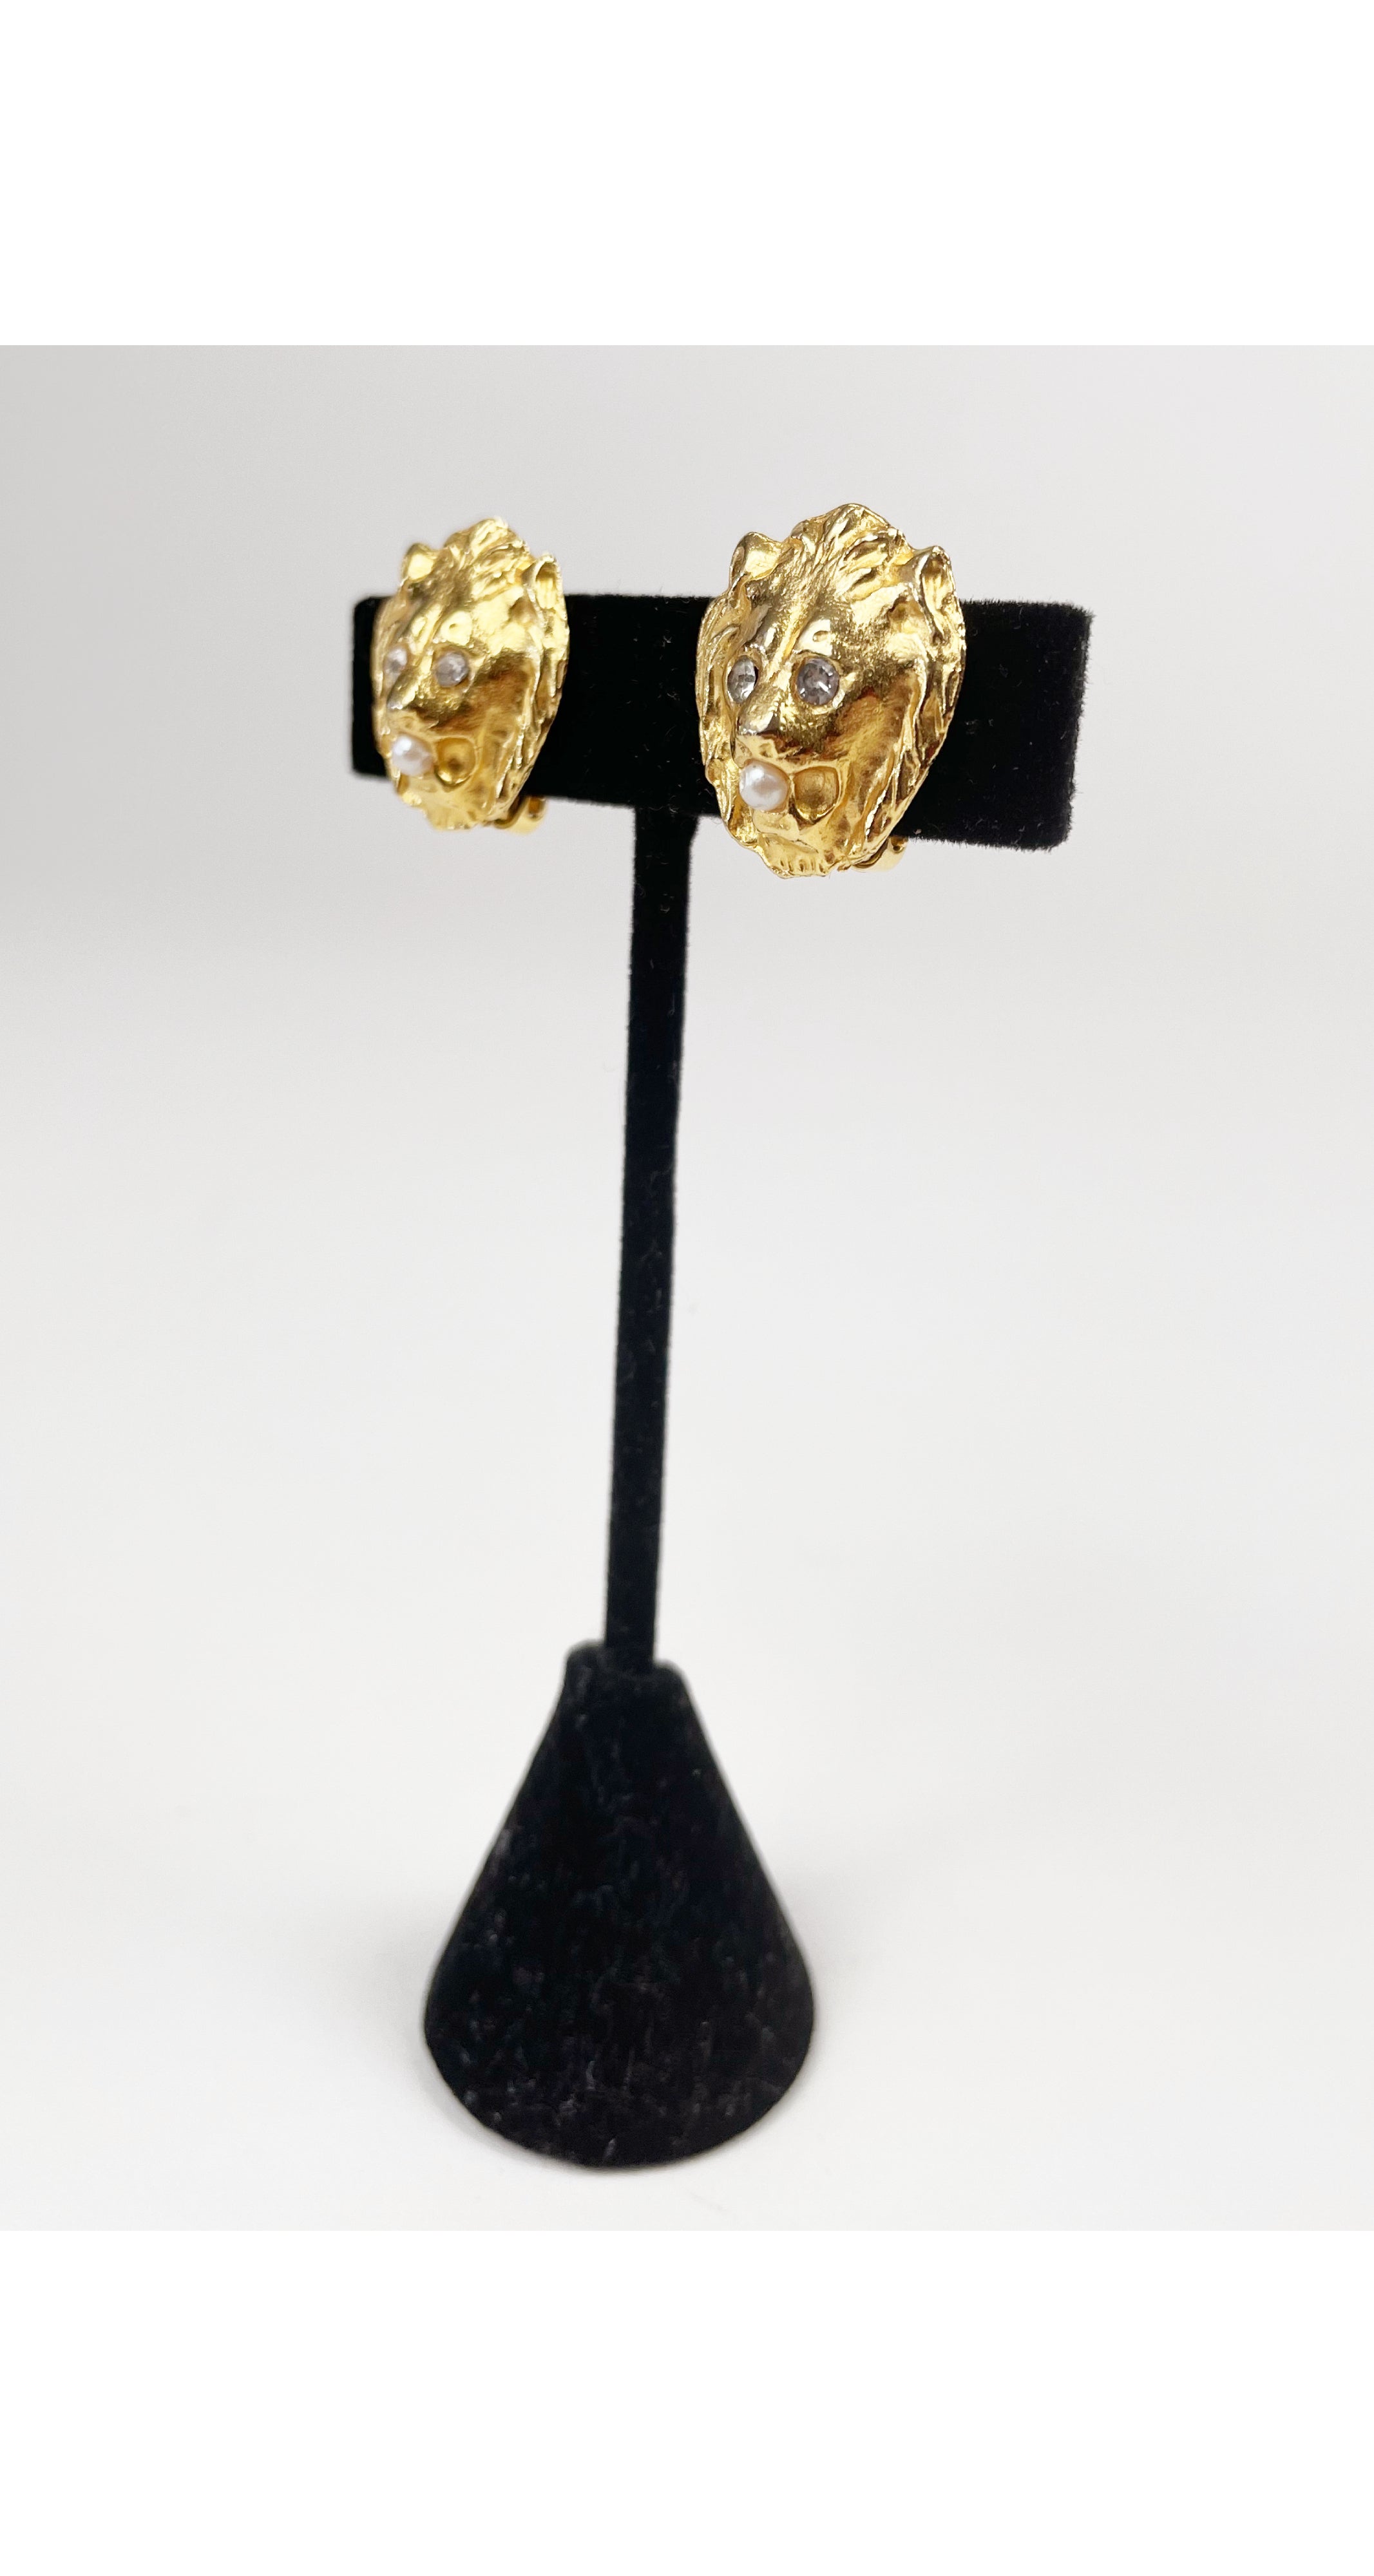 1980s Lion Head Figural Gold-Tone Clip-On Earrings